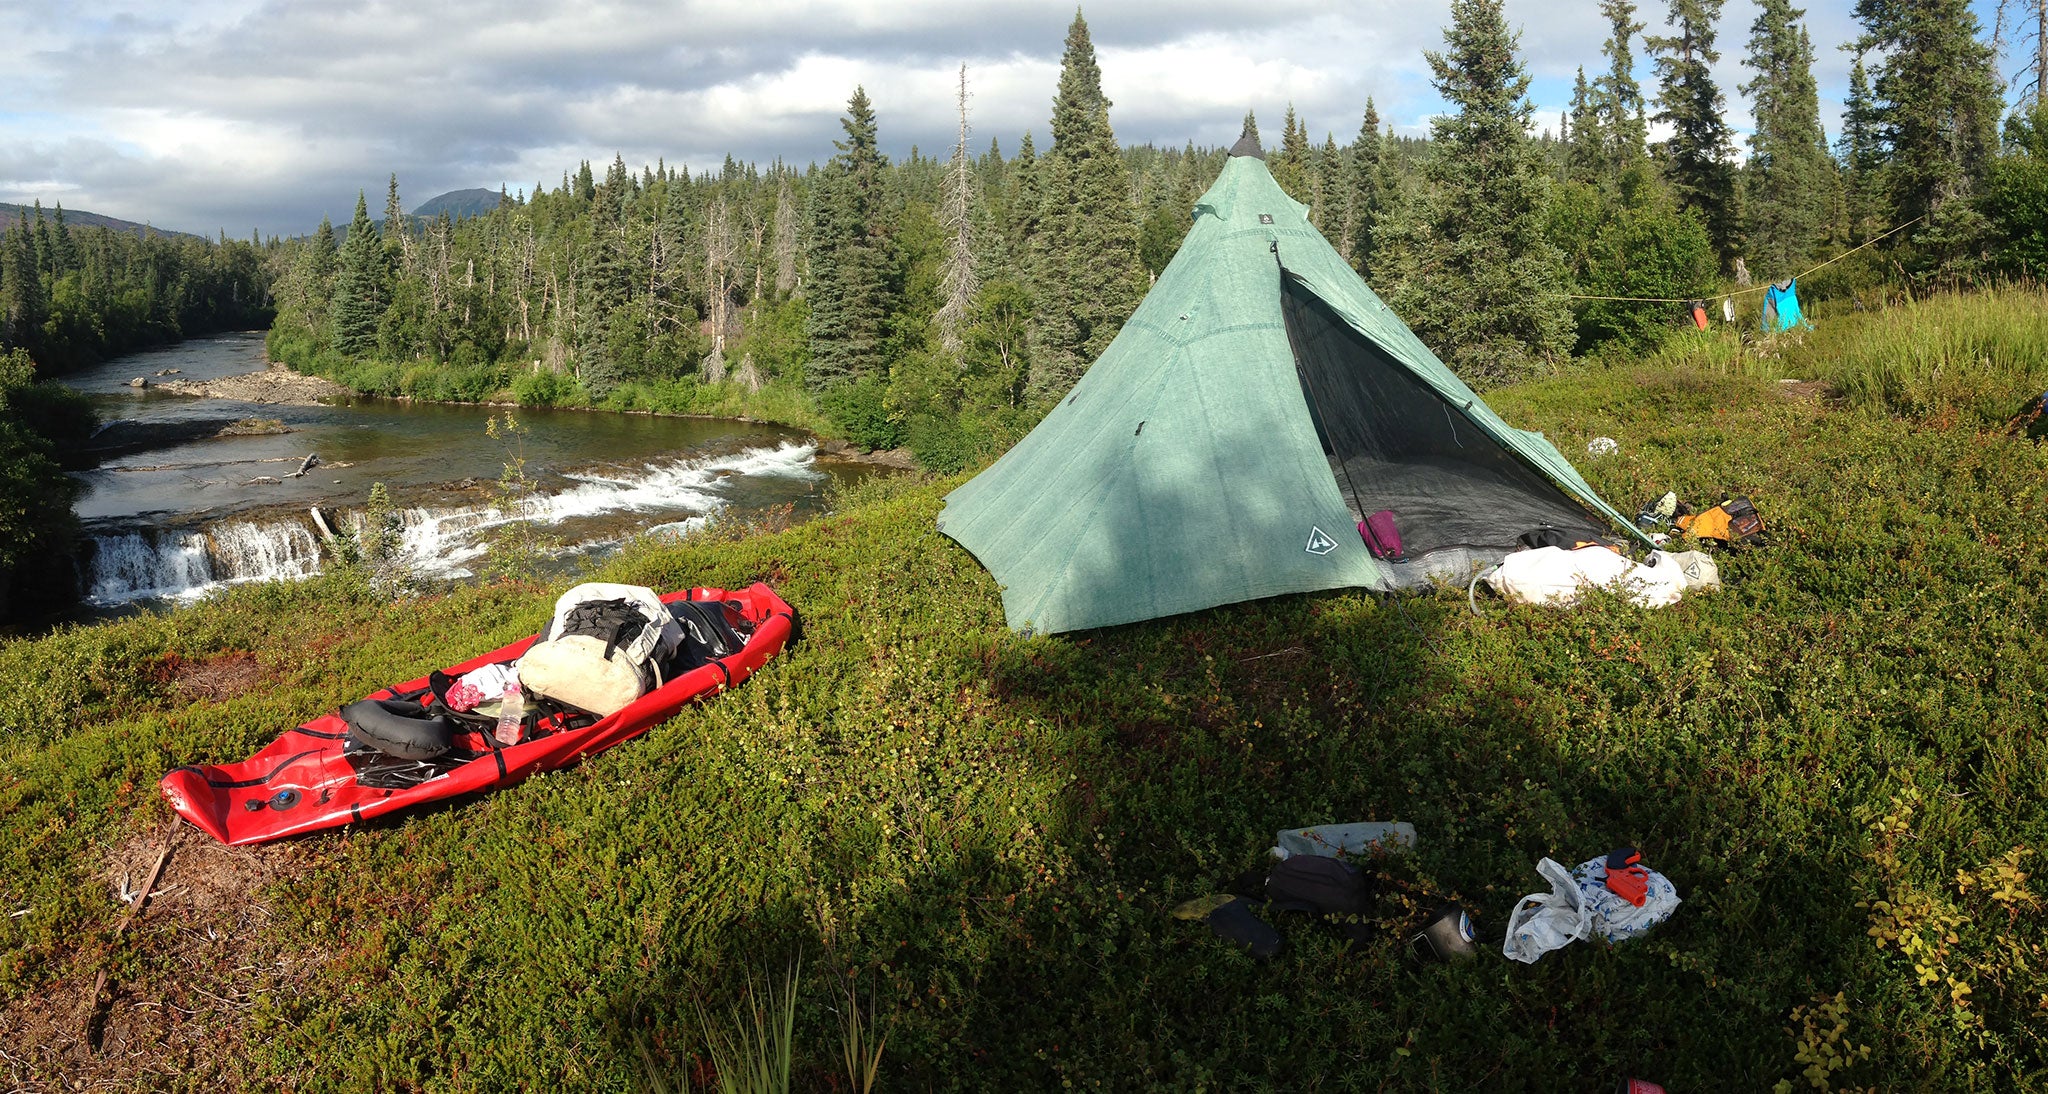 Backcountry camp setup near a river